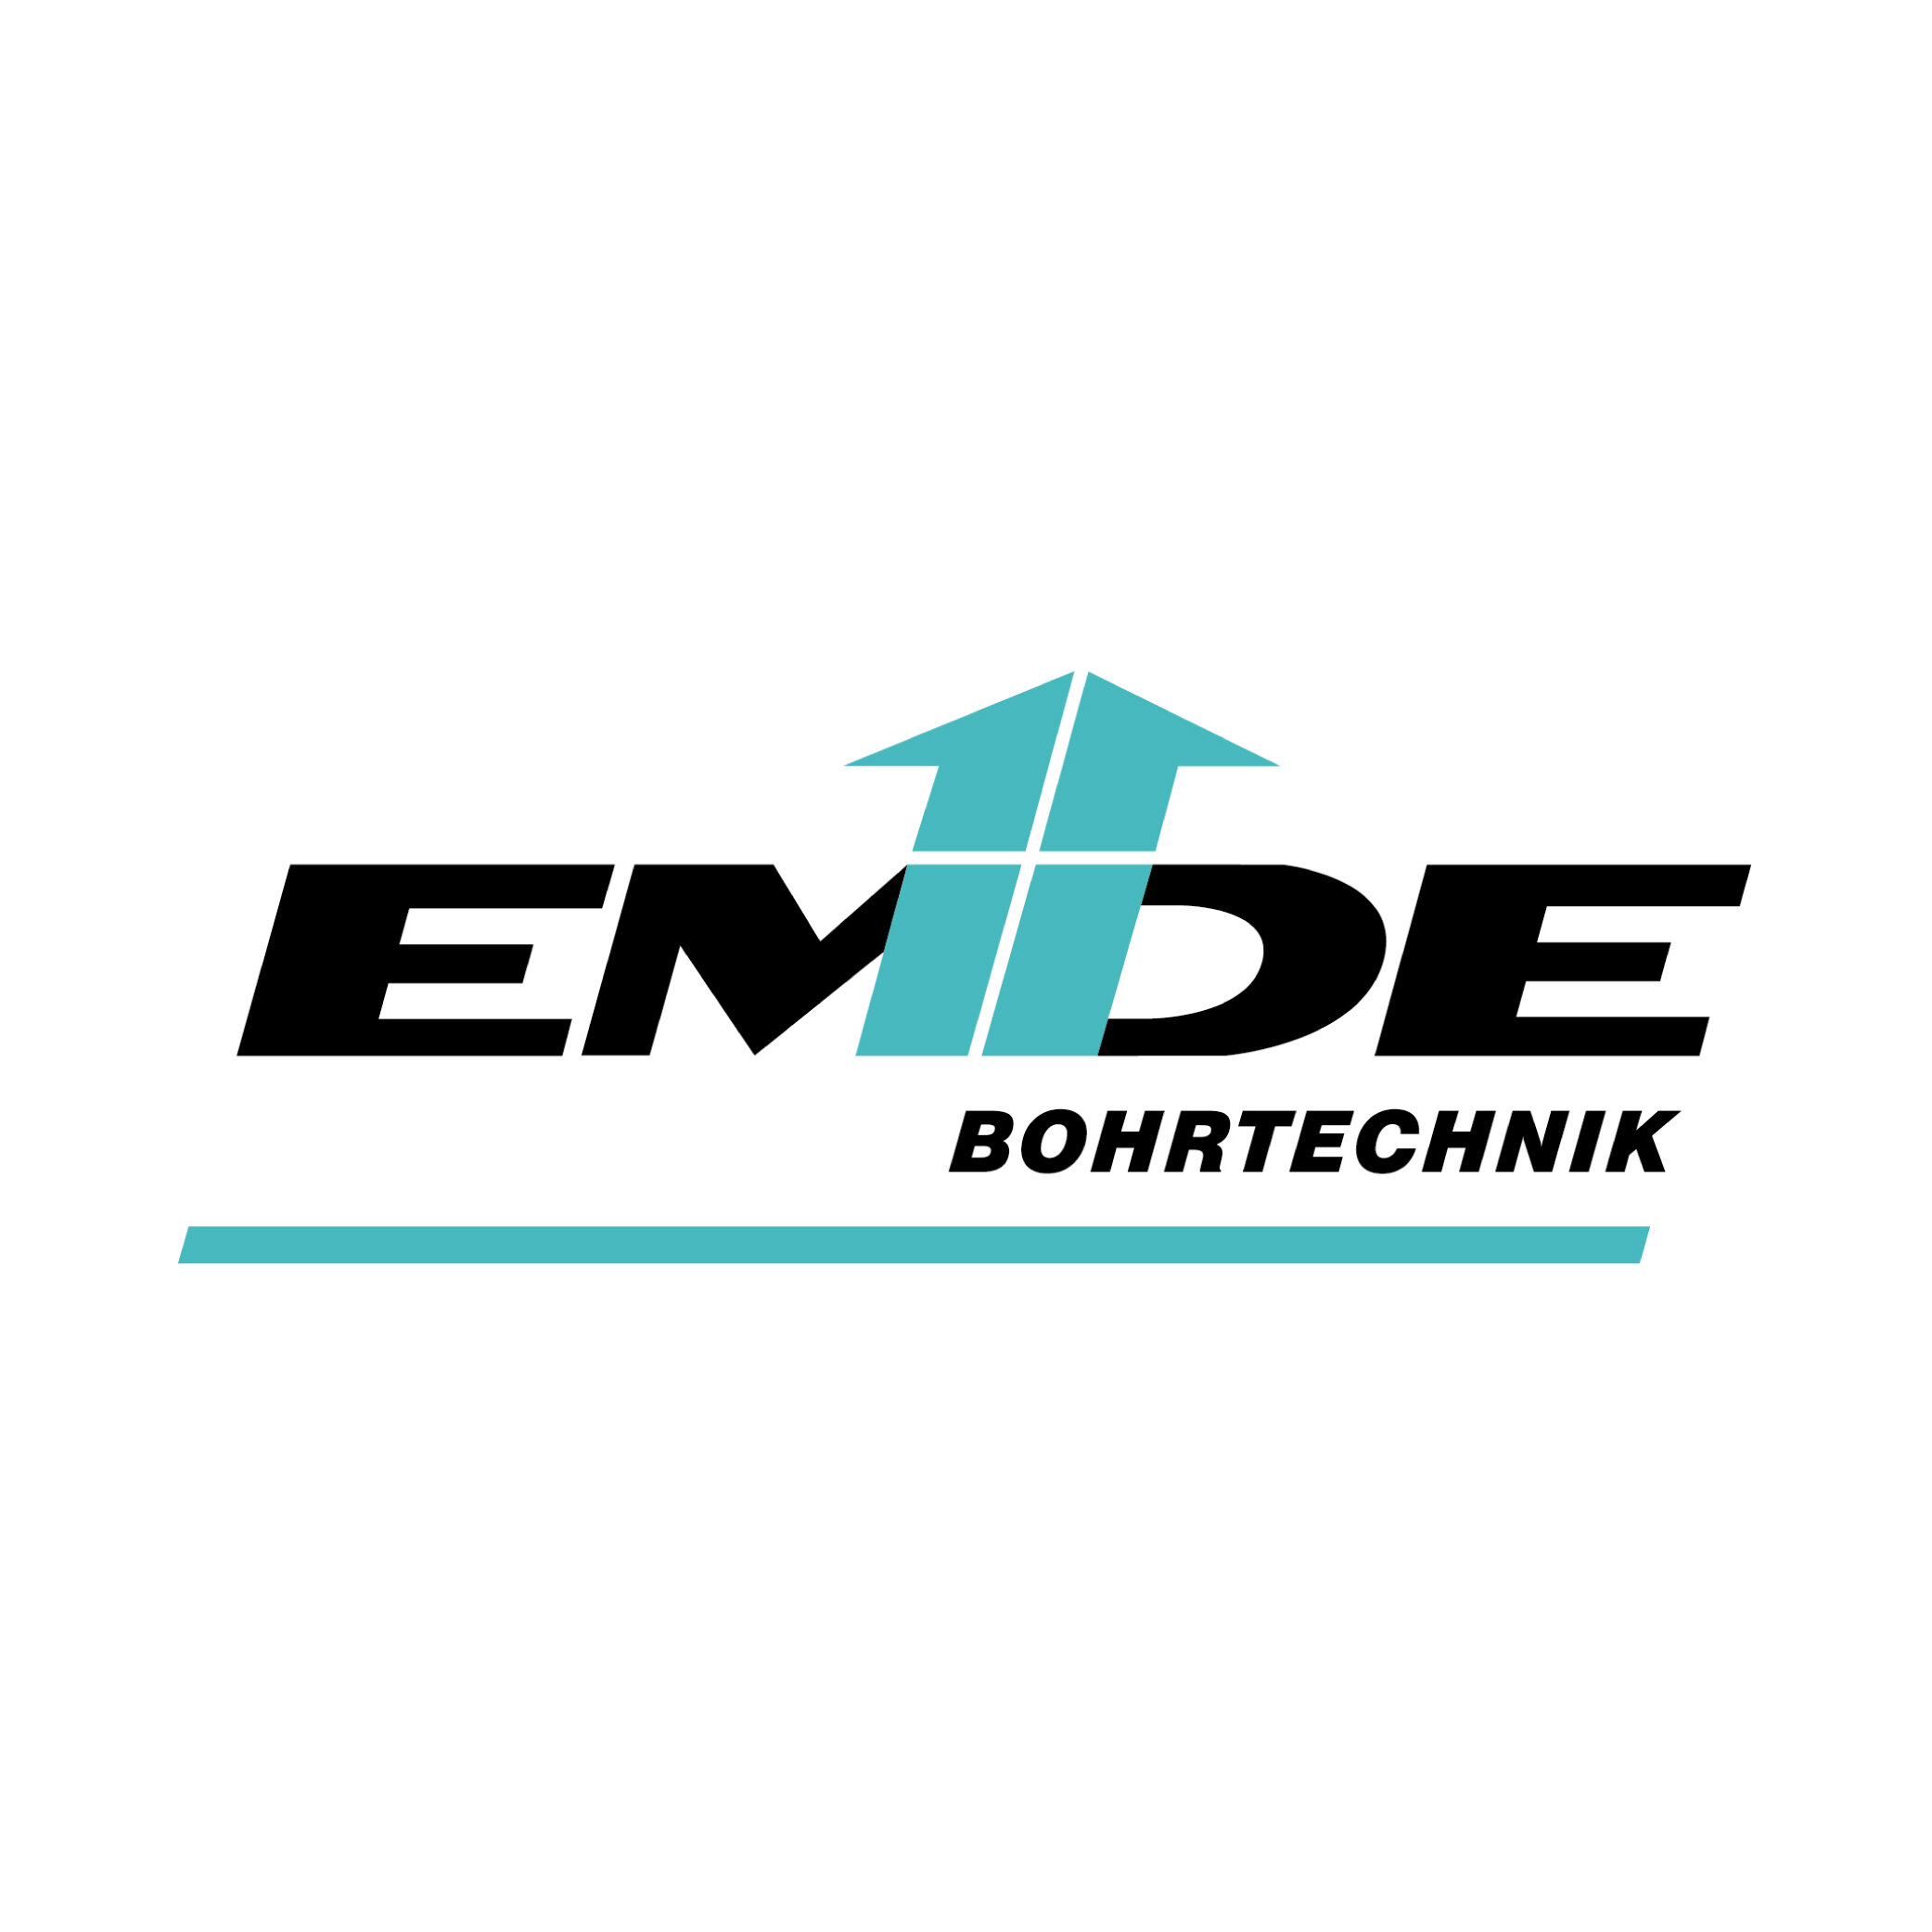 EMDE_logo-01.jpg